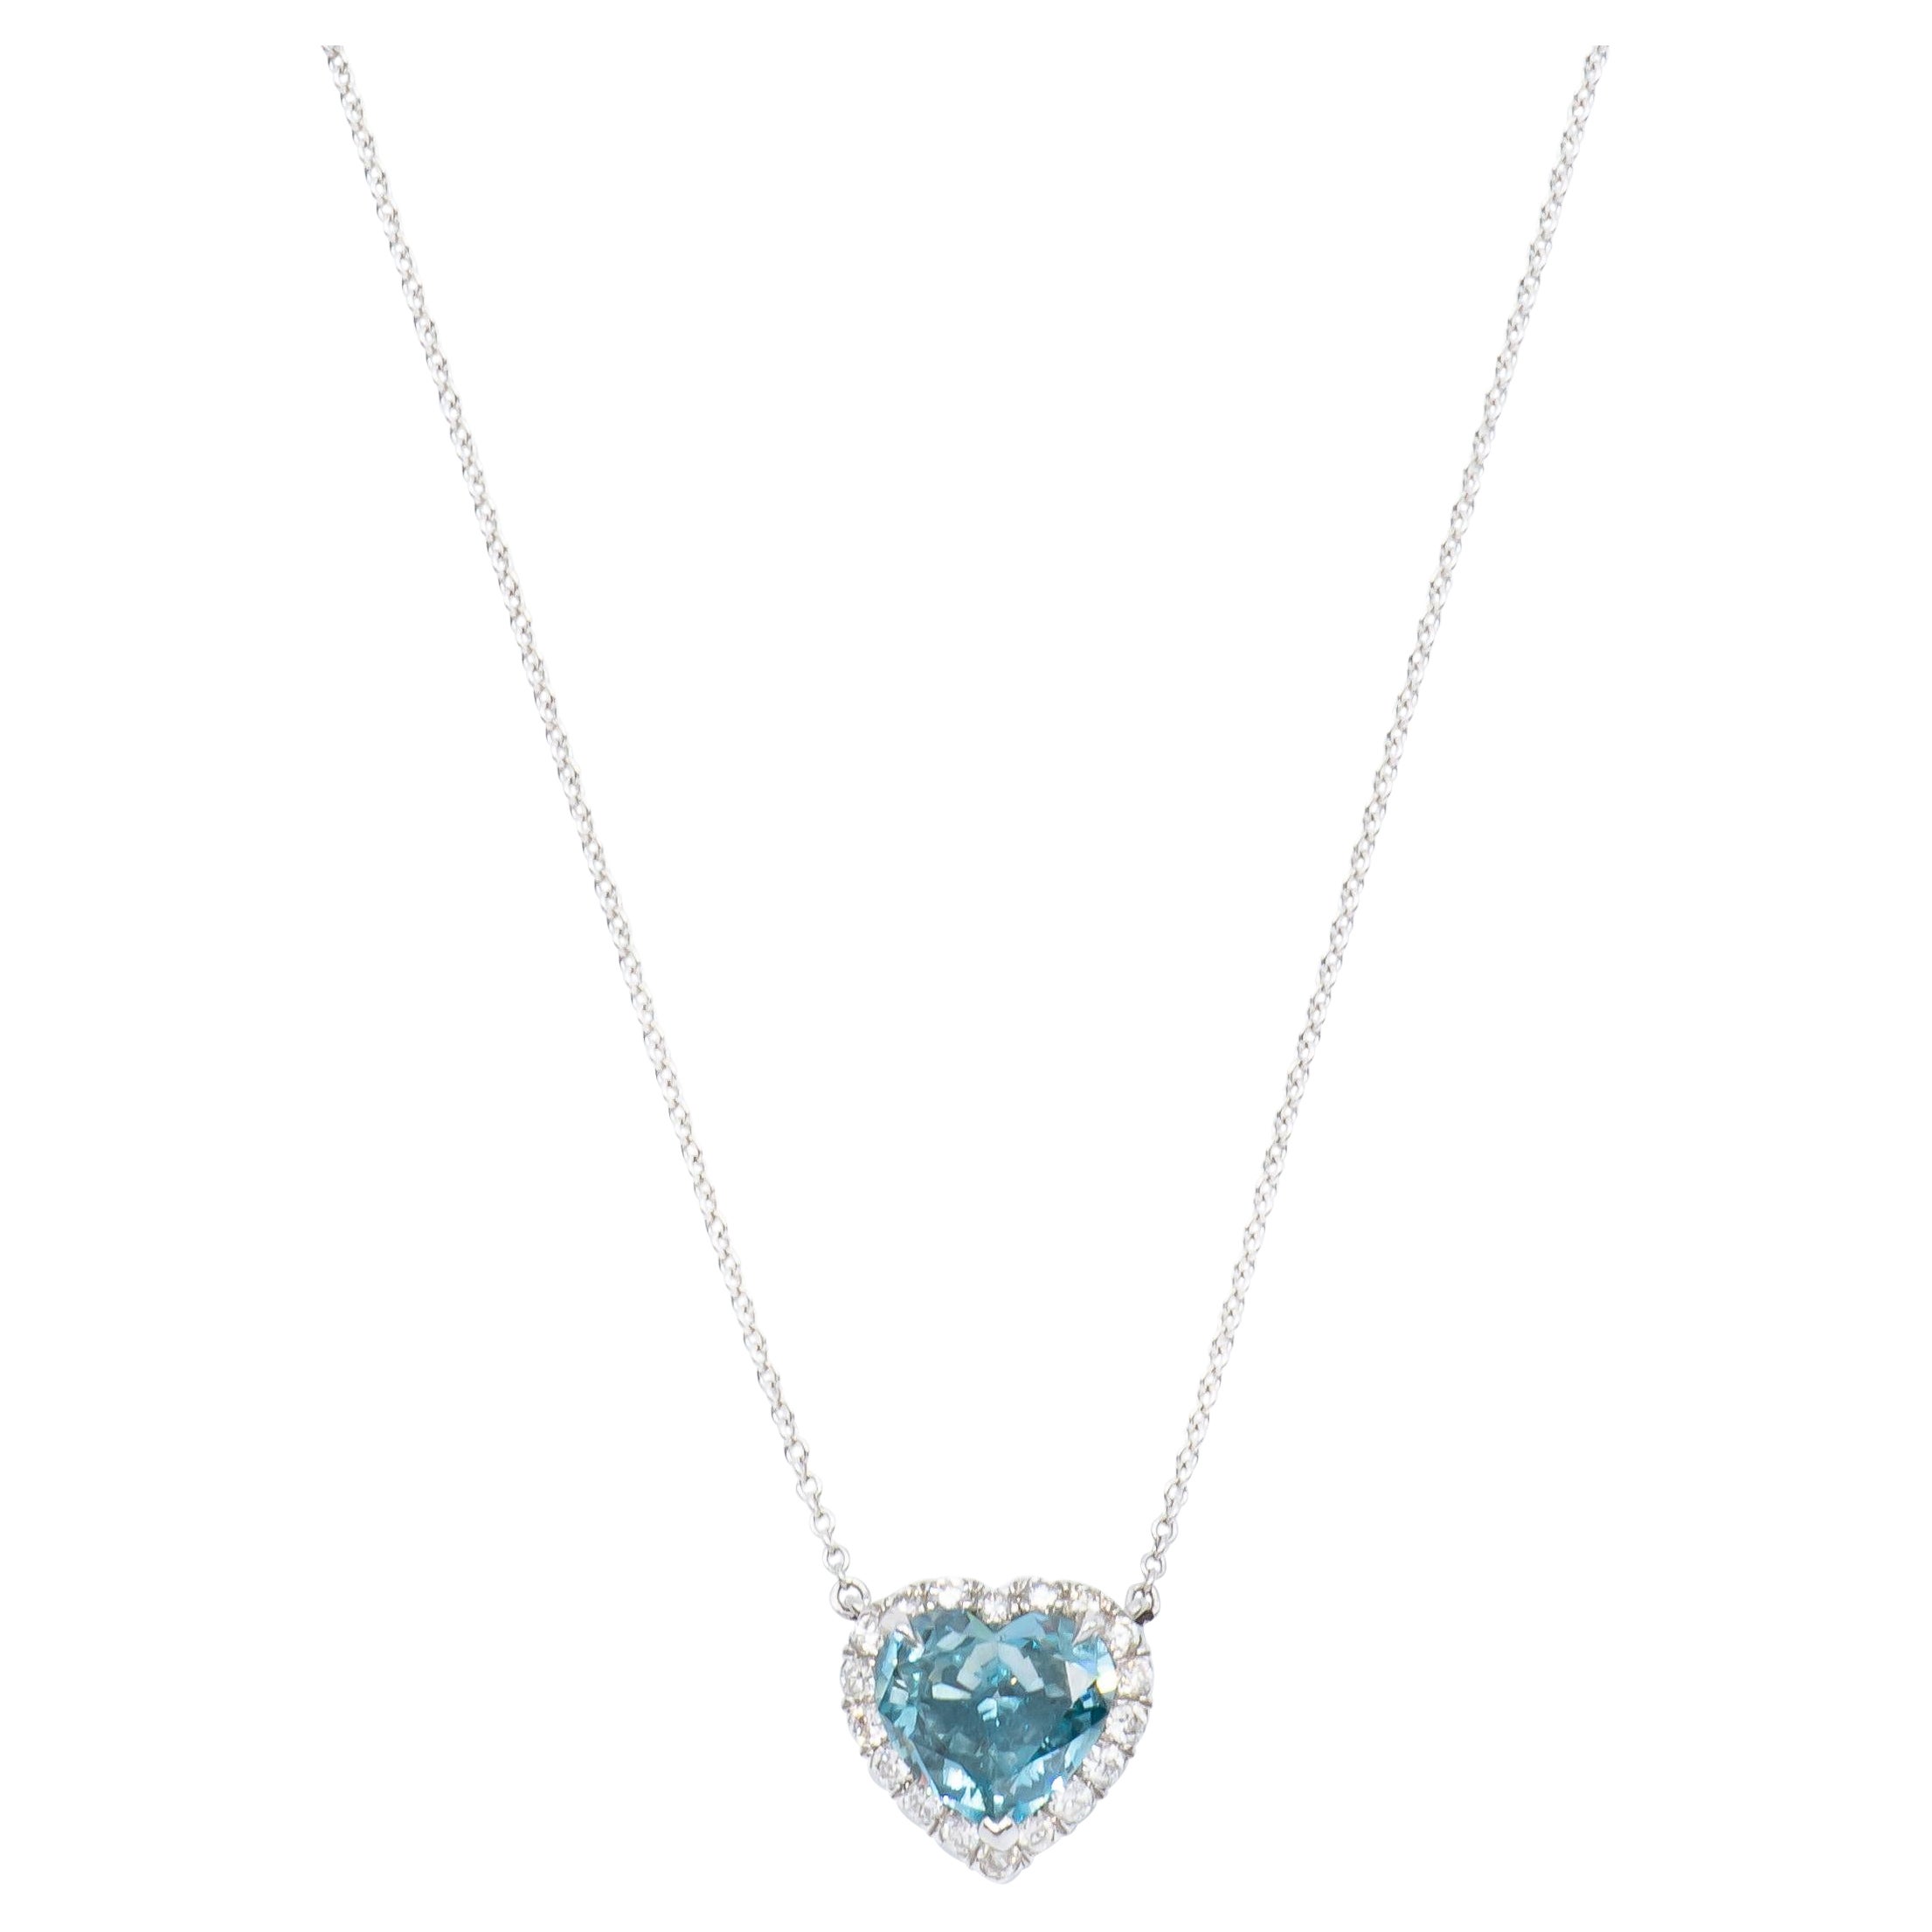 Diamant fantaisie bleu intense en forme de cœur certifié GIA